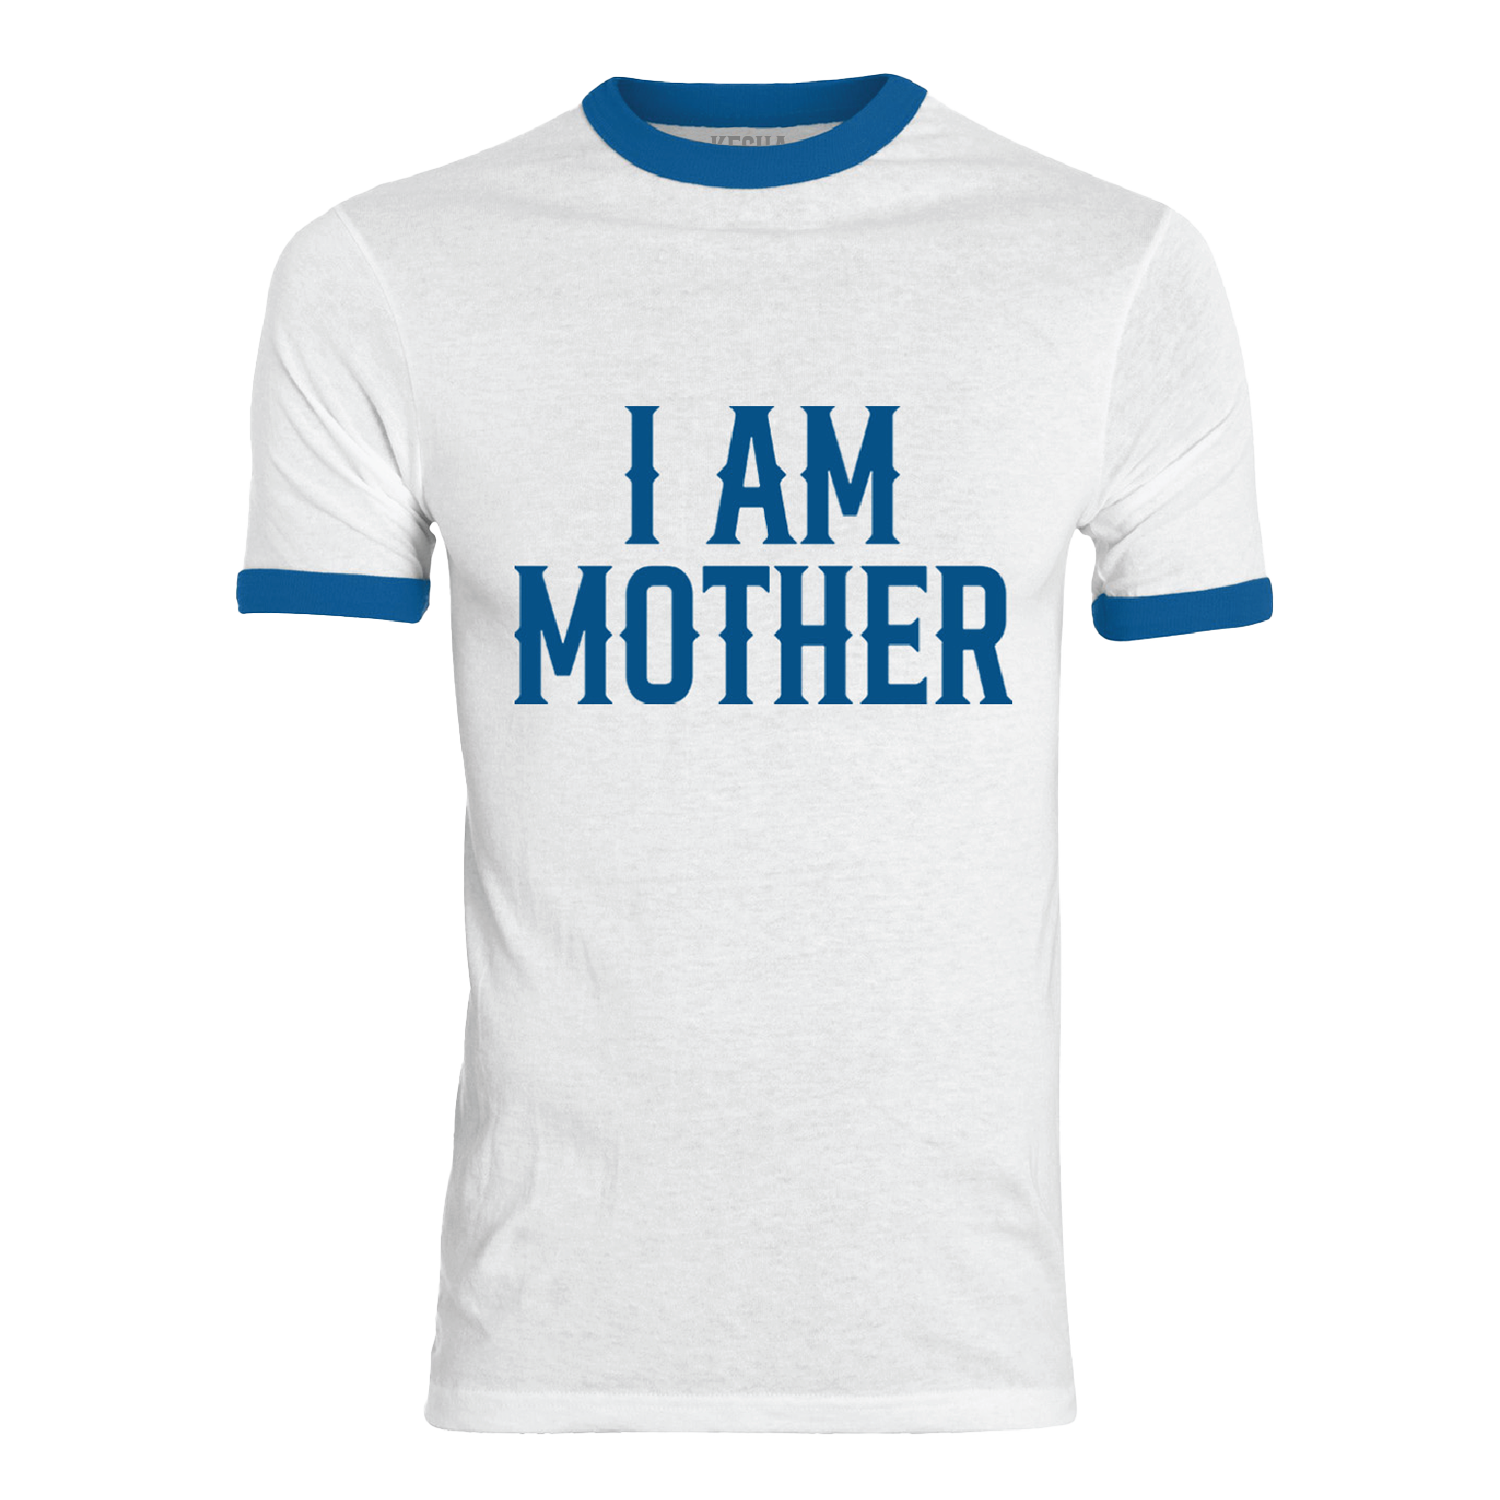 I Am Mother Ringer Tee